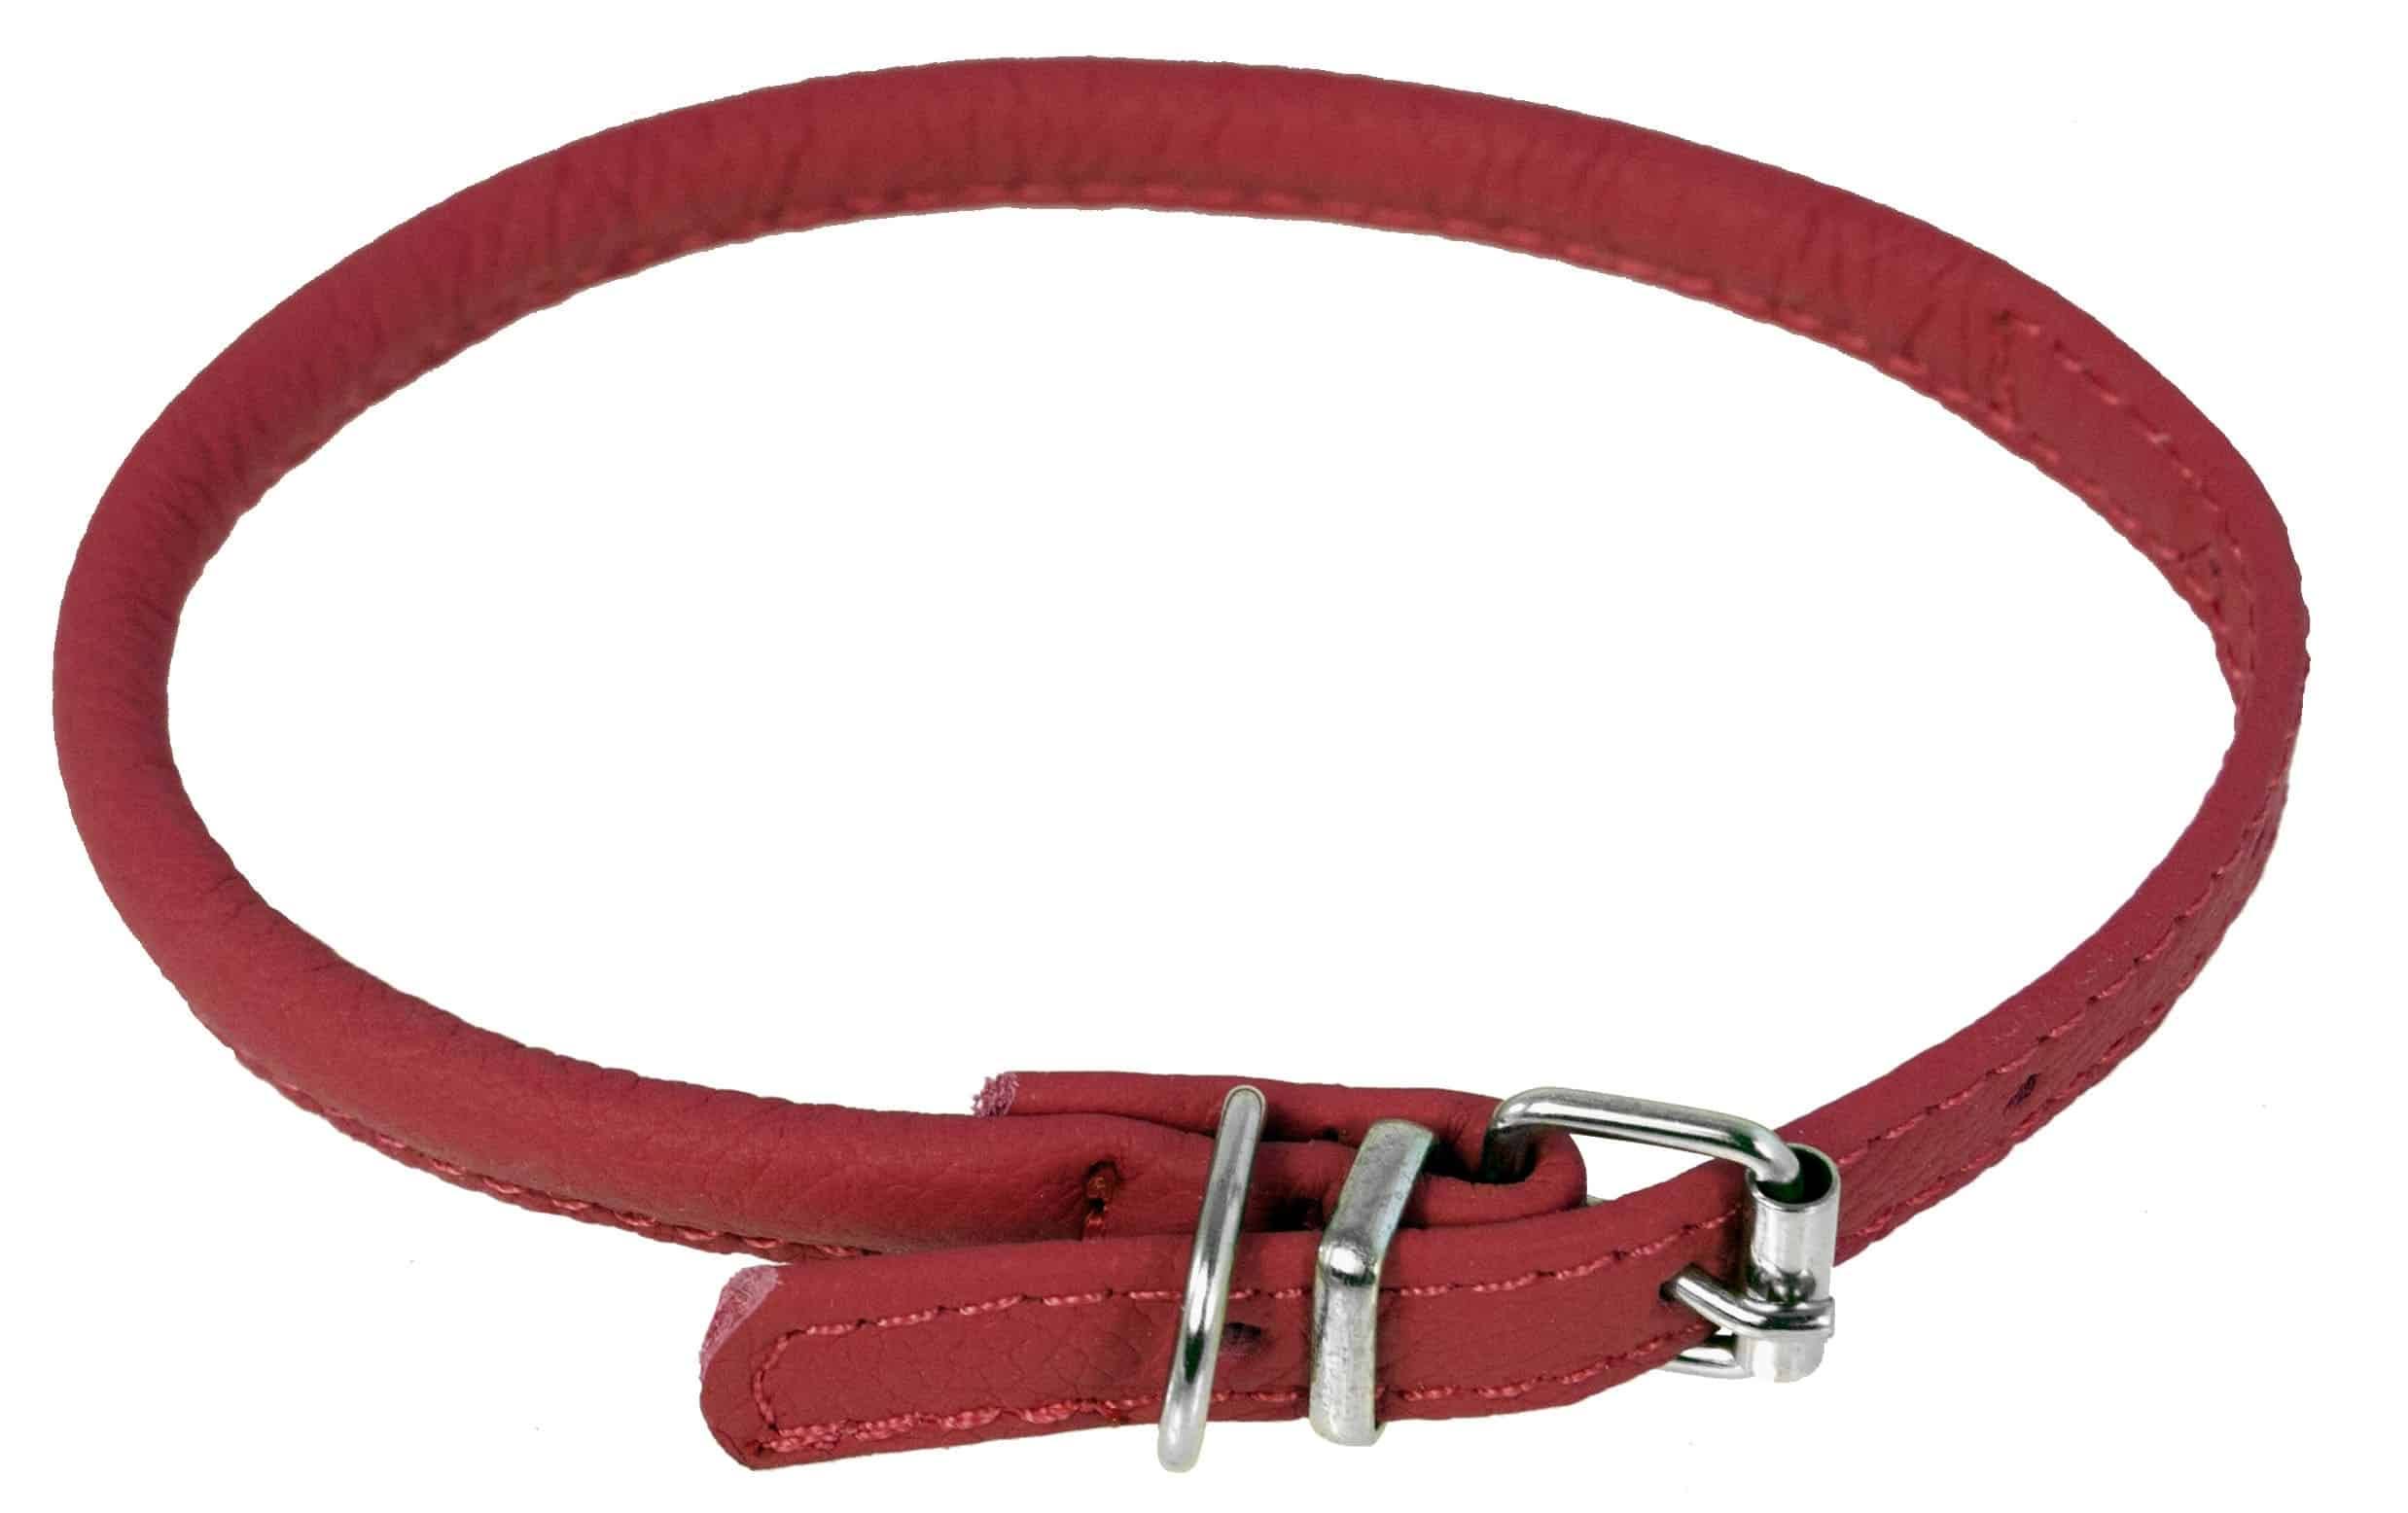 Dogline Leather Dog Collar - Red, 1/2" x 19-22"